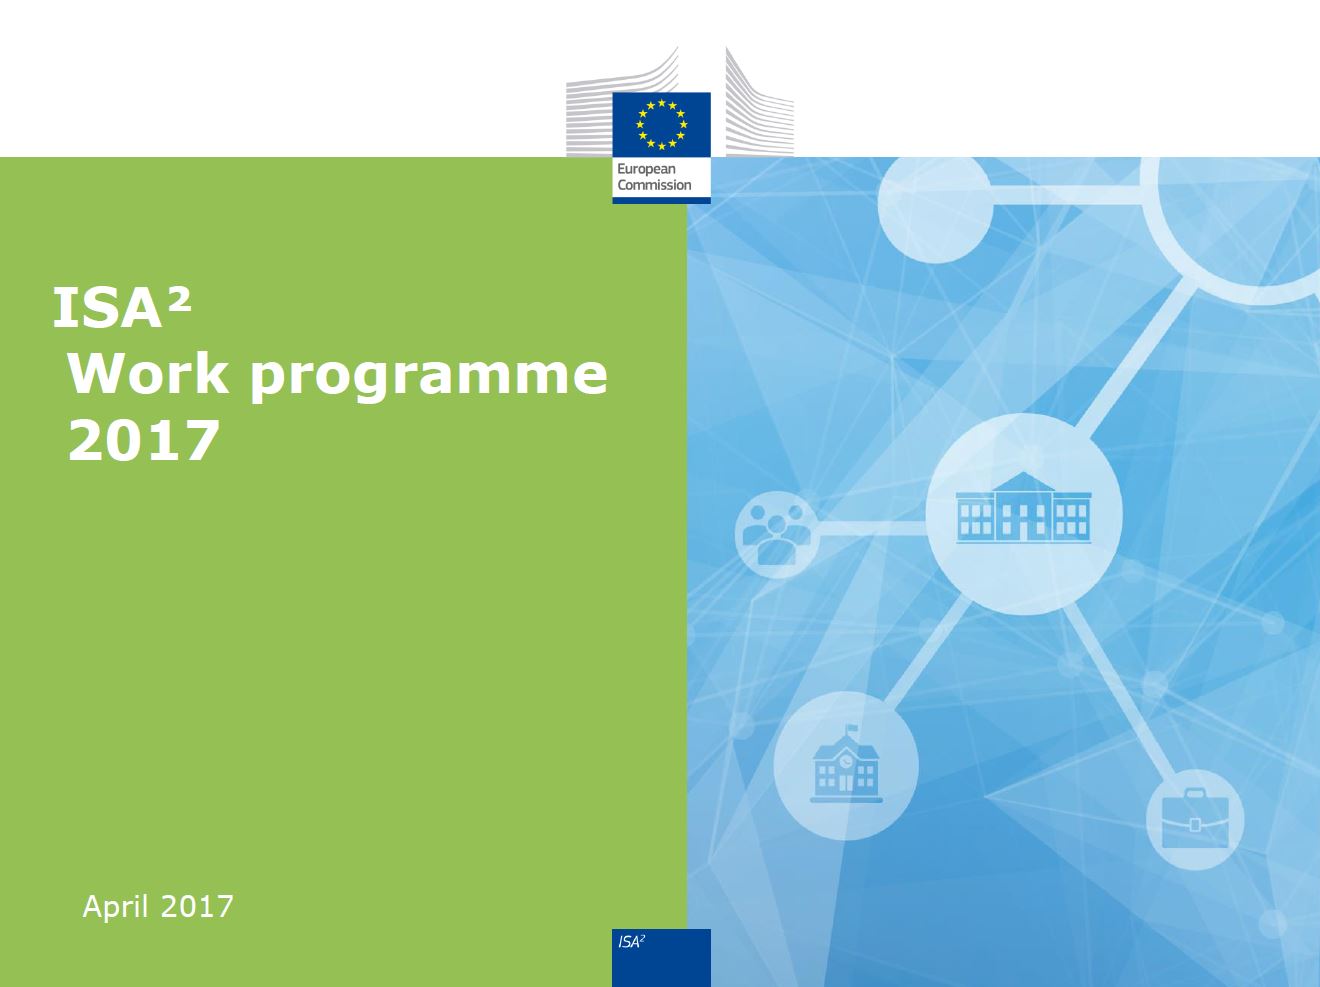 ISA2 Work programme 2017 presentation